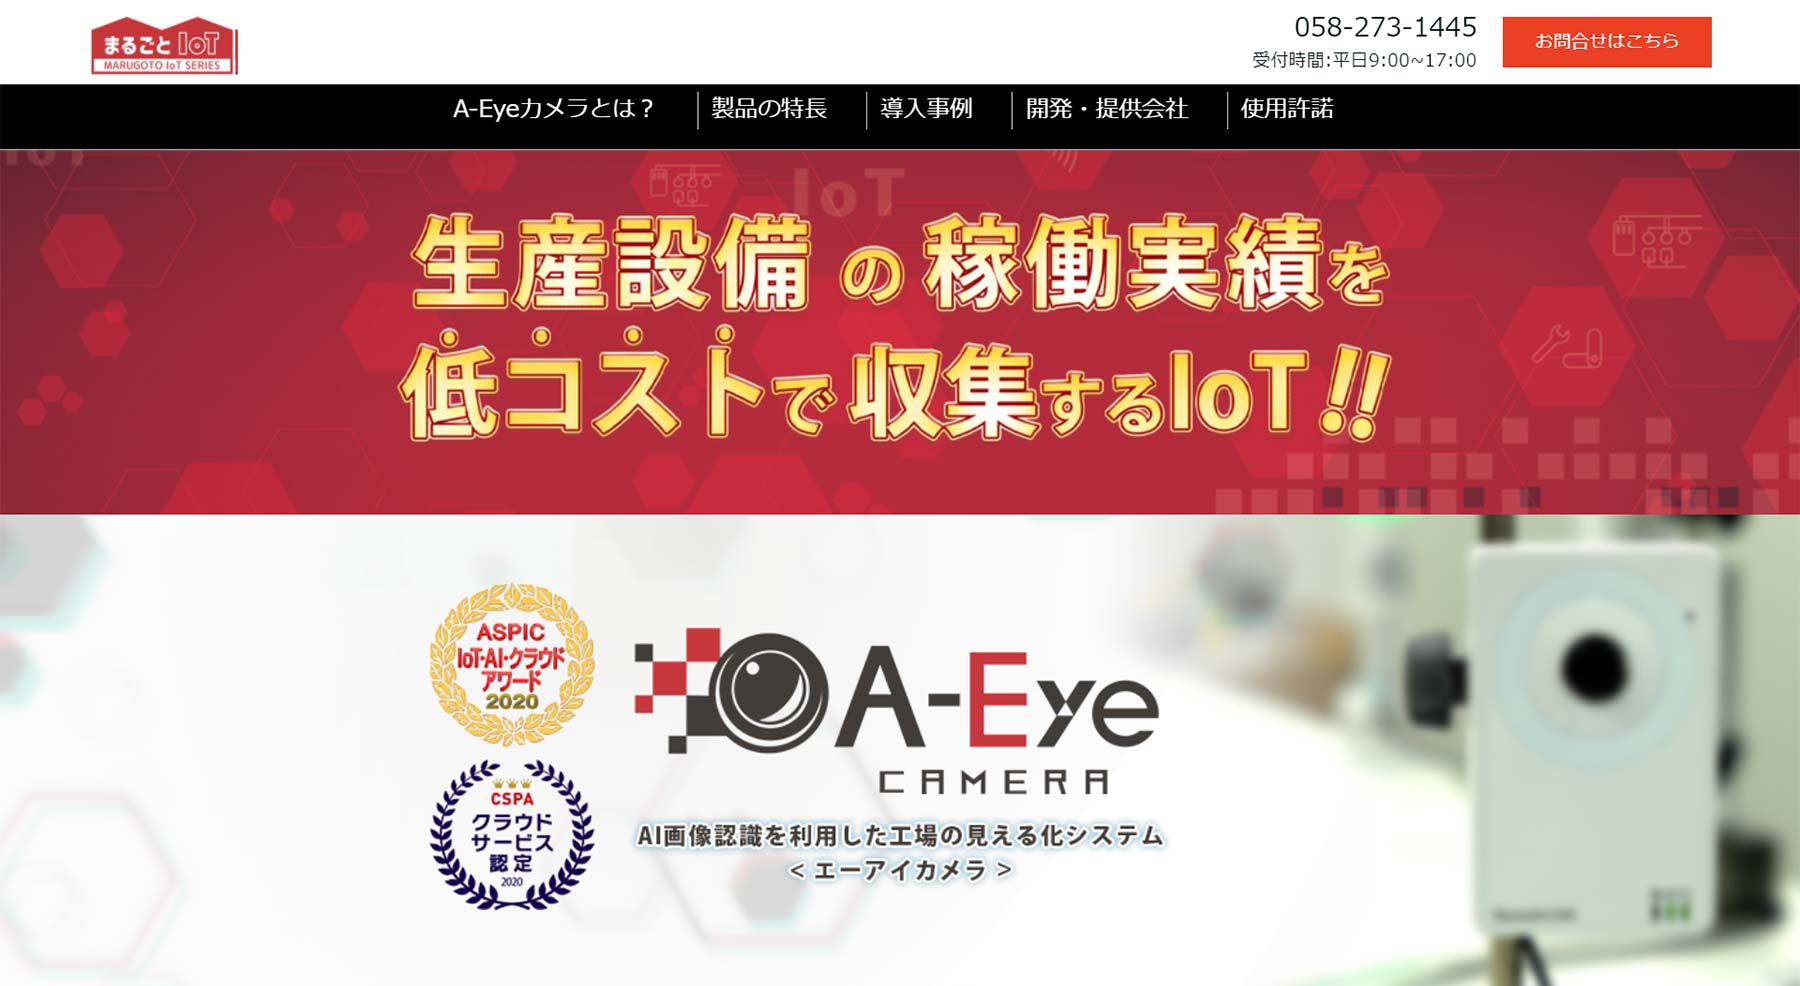 A-Eyeカメラ公式Webサイト